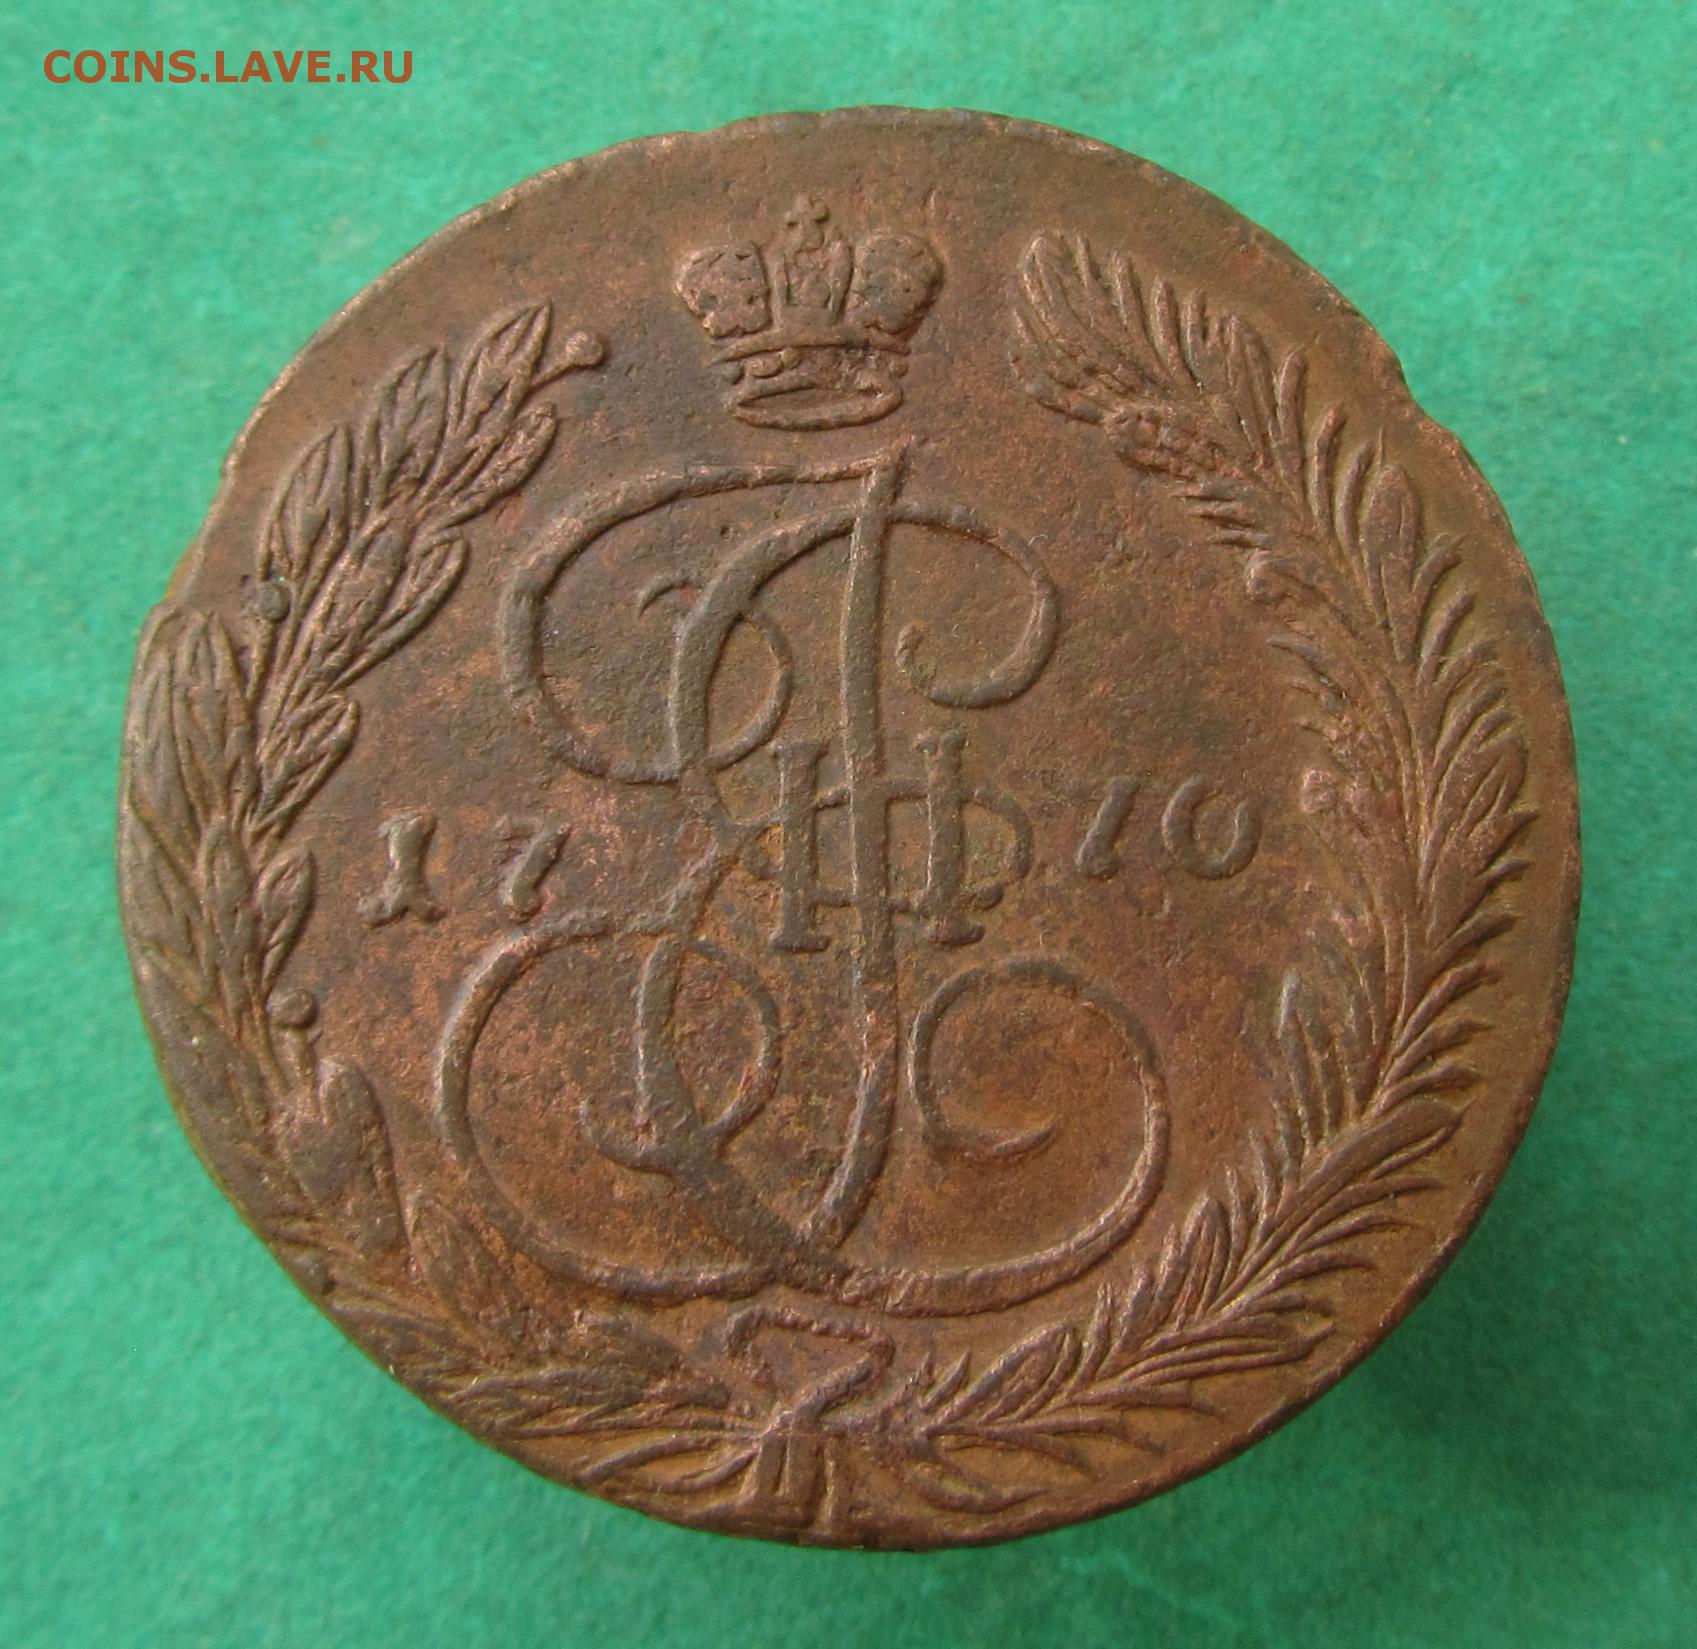 5 копеек сканворд. 5 Копеек 1773. Пять копеек 1773. Медная монета 5 копеек 1773 года. Копейка 1773 года.